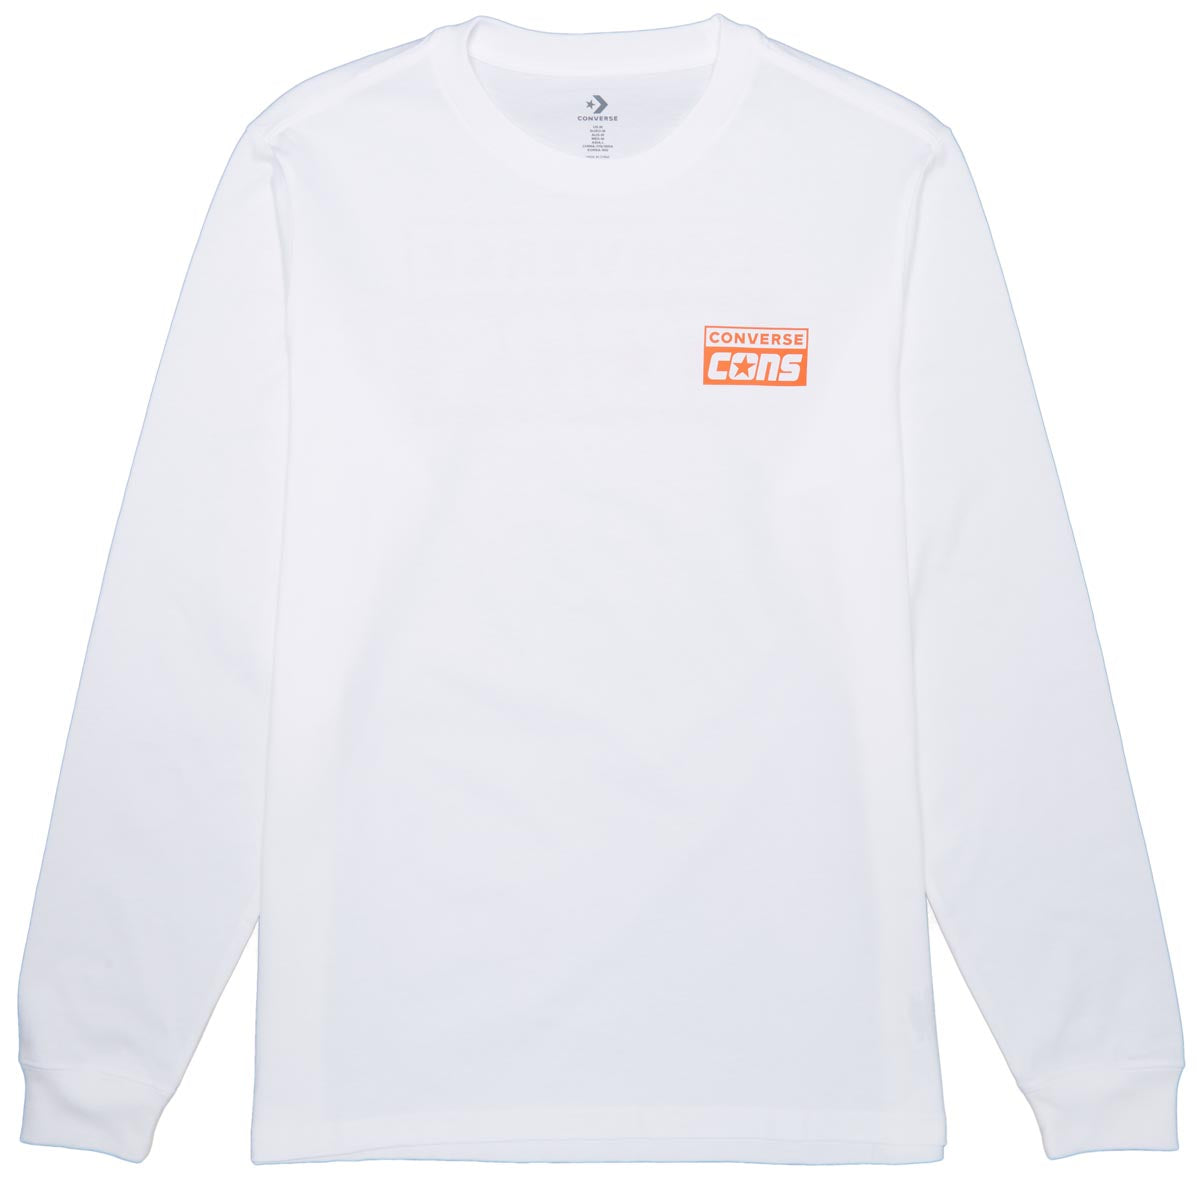 Converse Long Sleeve T-Shirt - White image 2